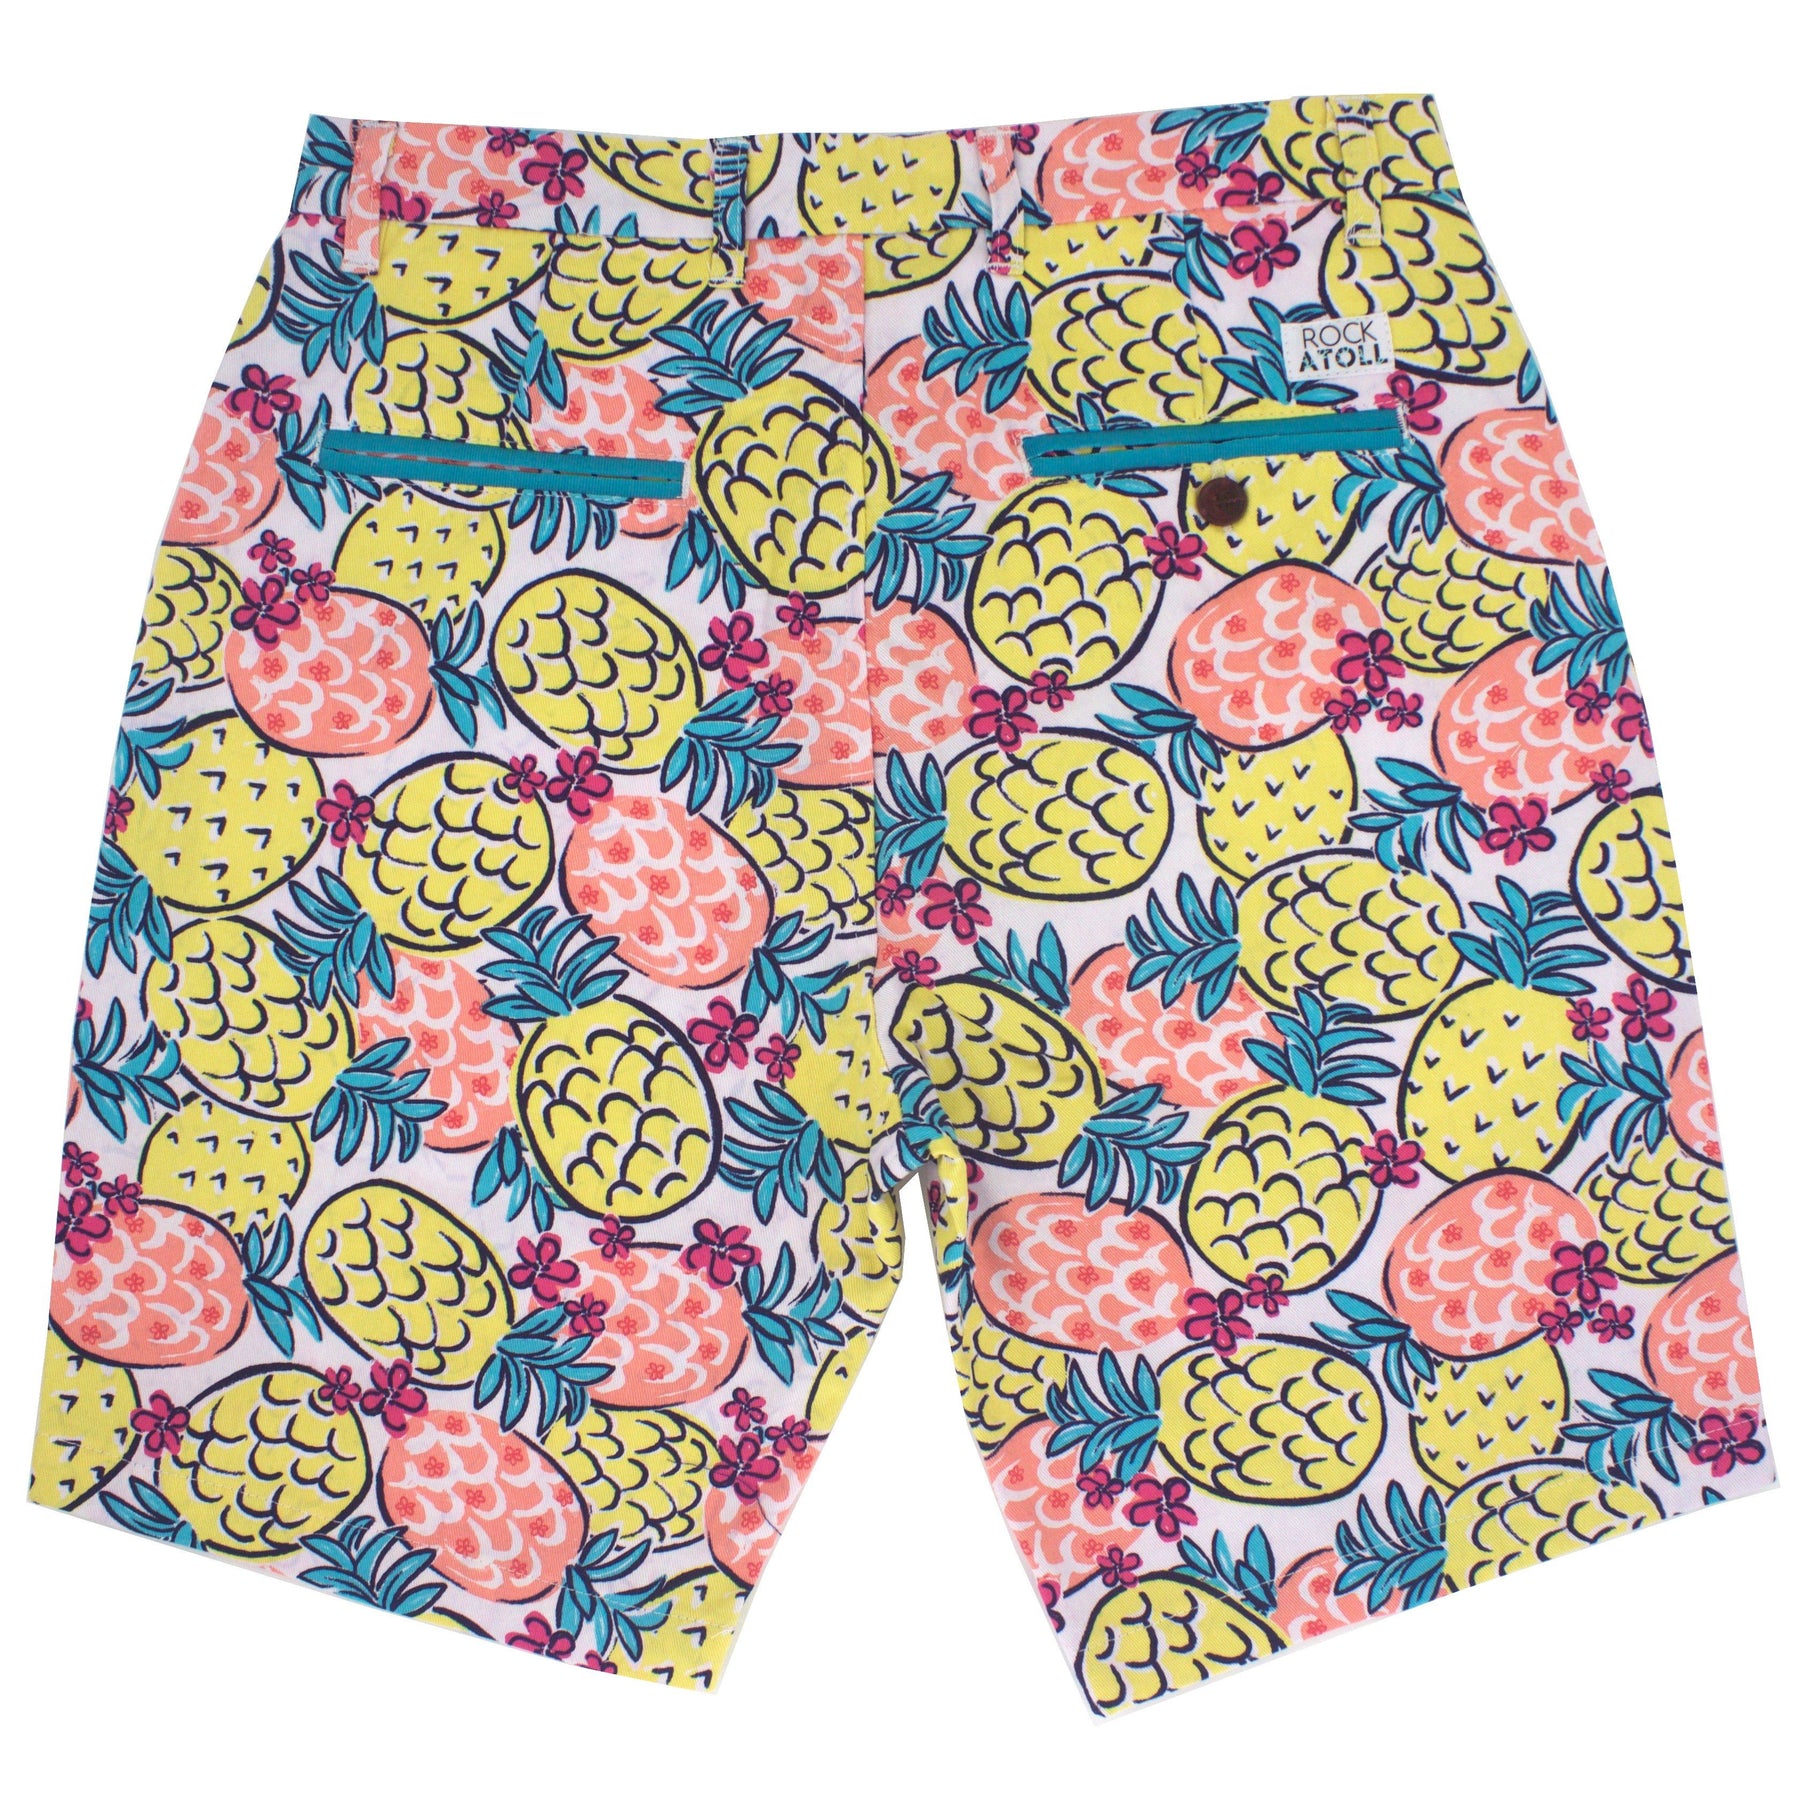 Pineapple Shorts For Men. Buy Mens Pineapple Shorts Online – Rock Atoll